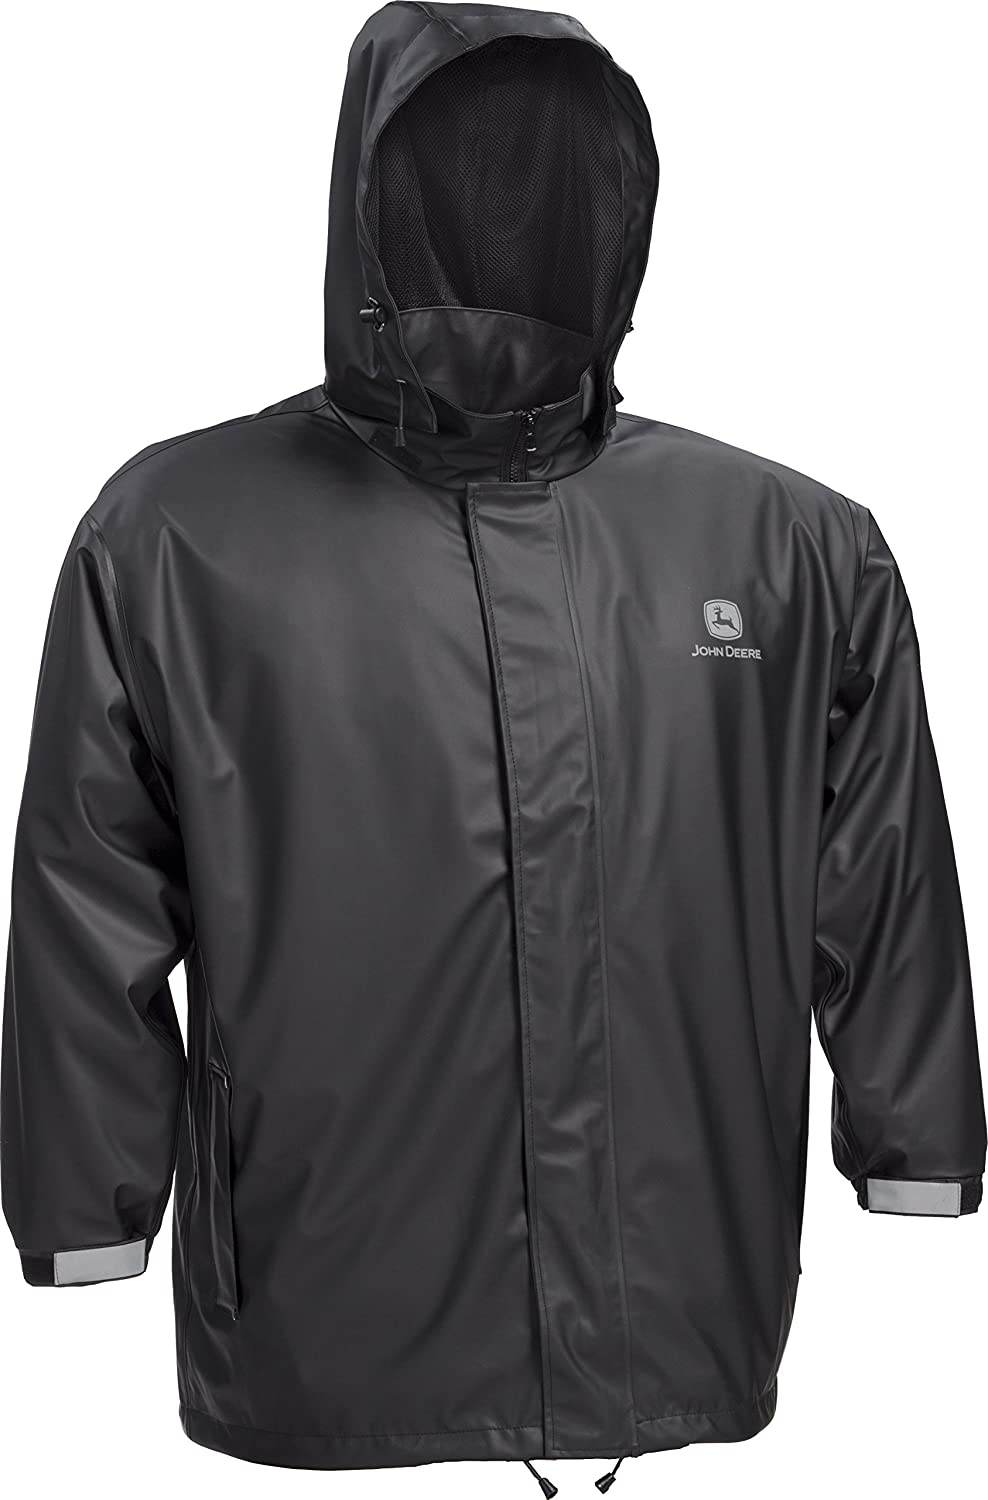 John Deere JD44540J Stretch PU Jacket – [Black] Large, Mesh Lining, Reflective Logo with Tuck in Hood